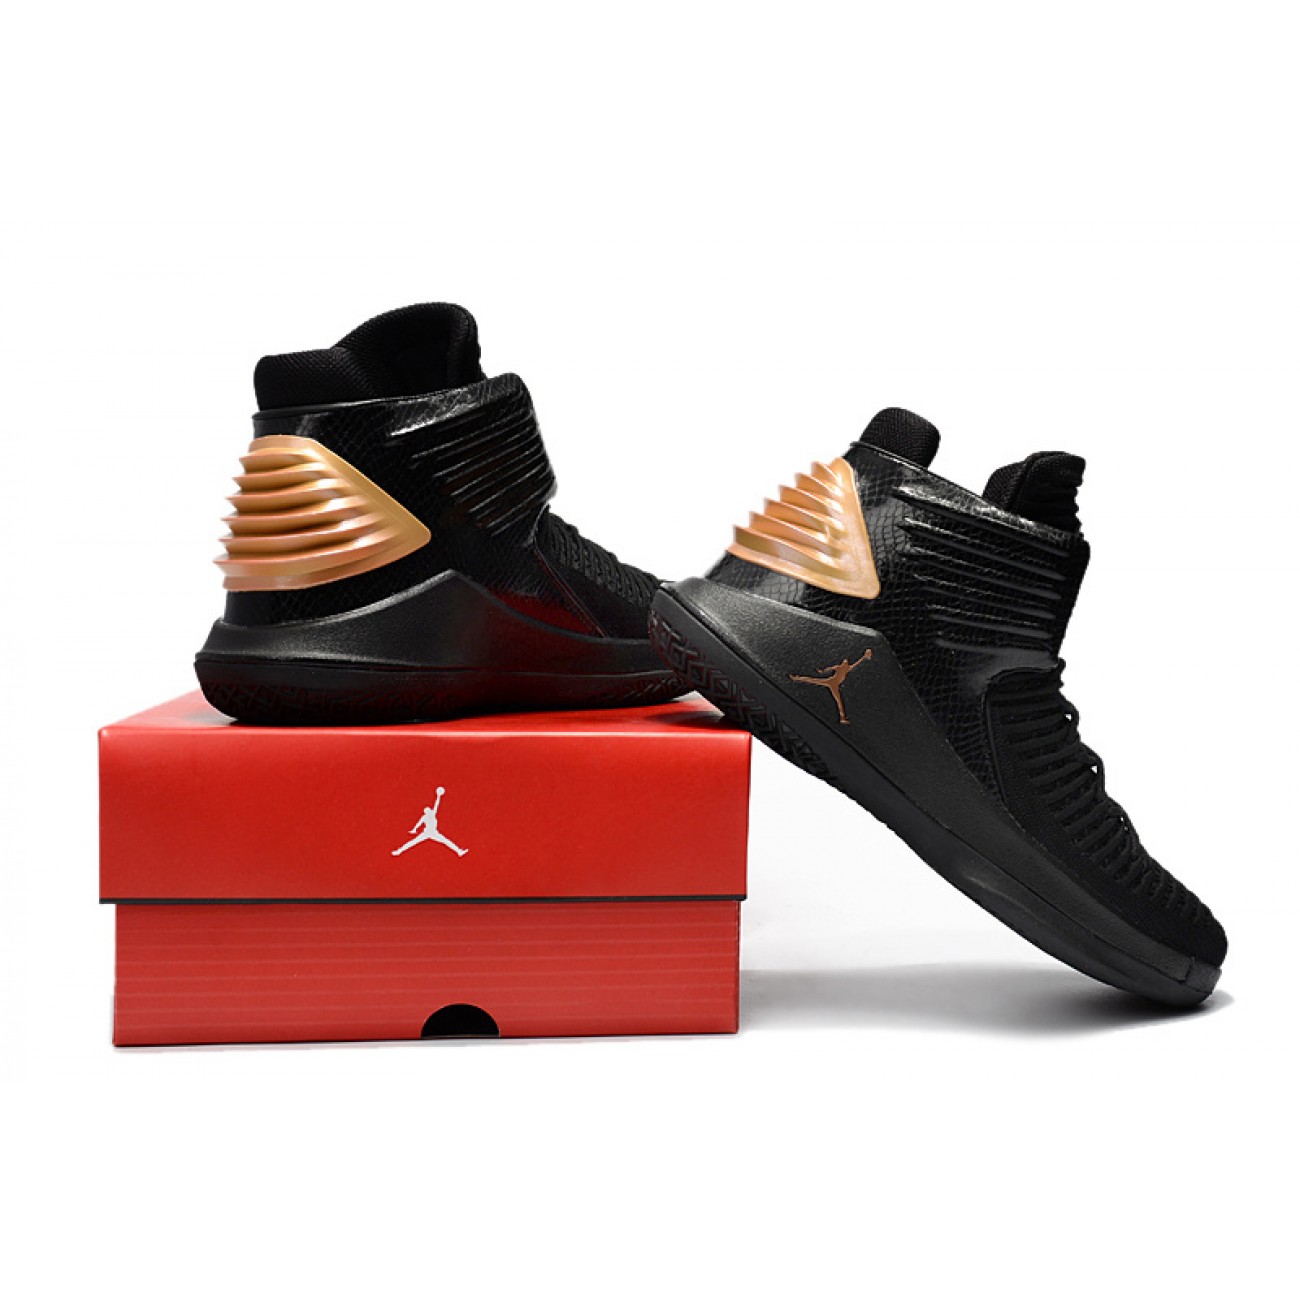 Air Jordan 32 XXXII "MJ DAY" / Black / Gold